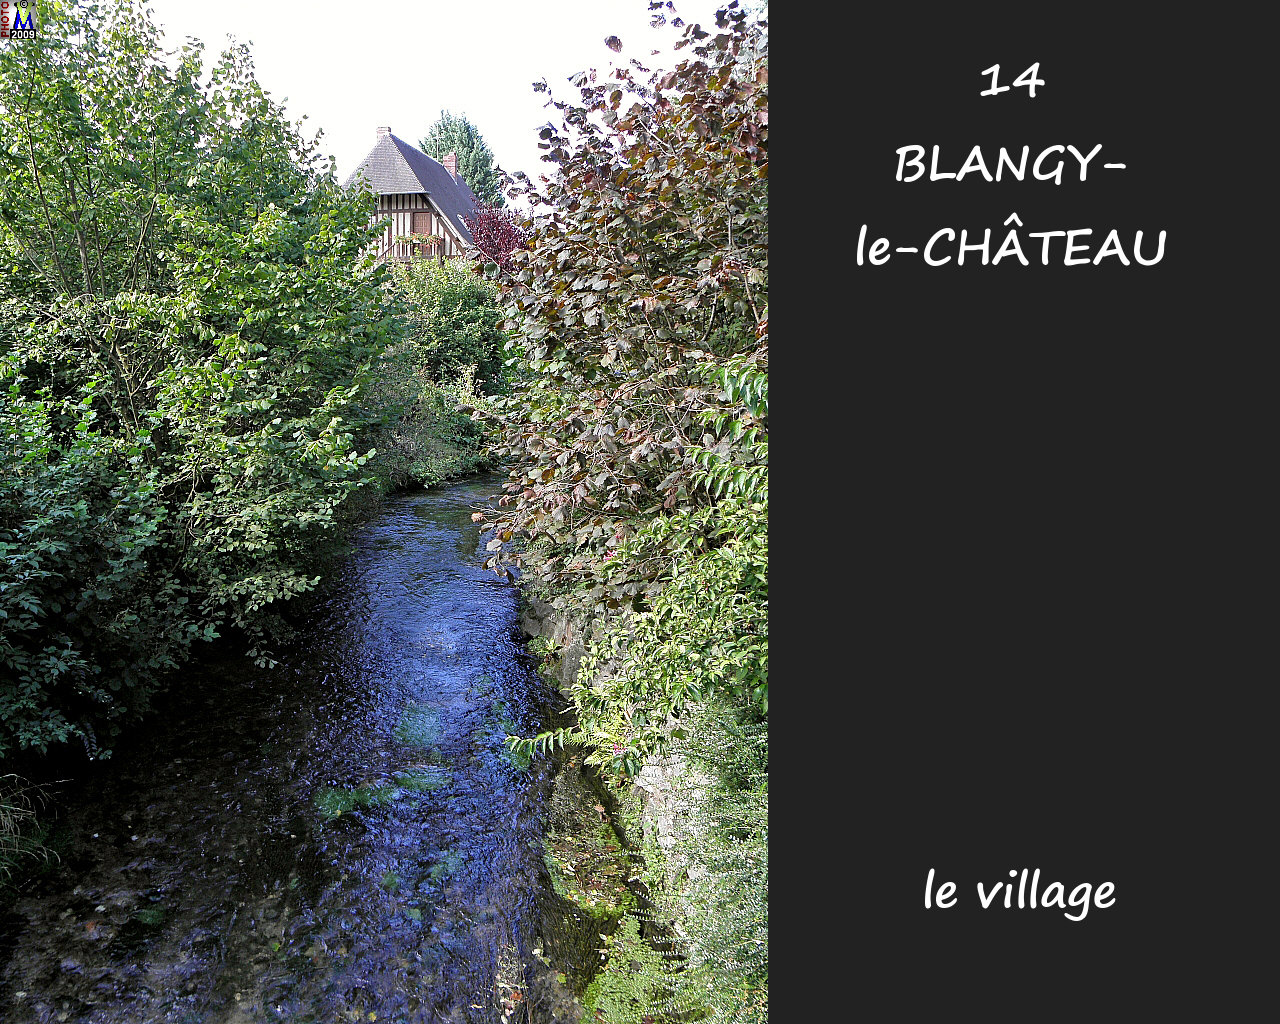 14BLANGY-le-CHATEAU_village_142.jpg